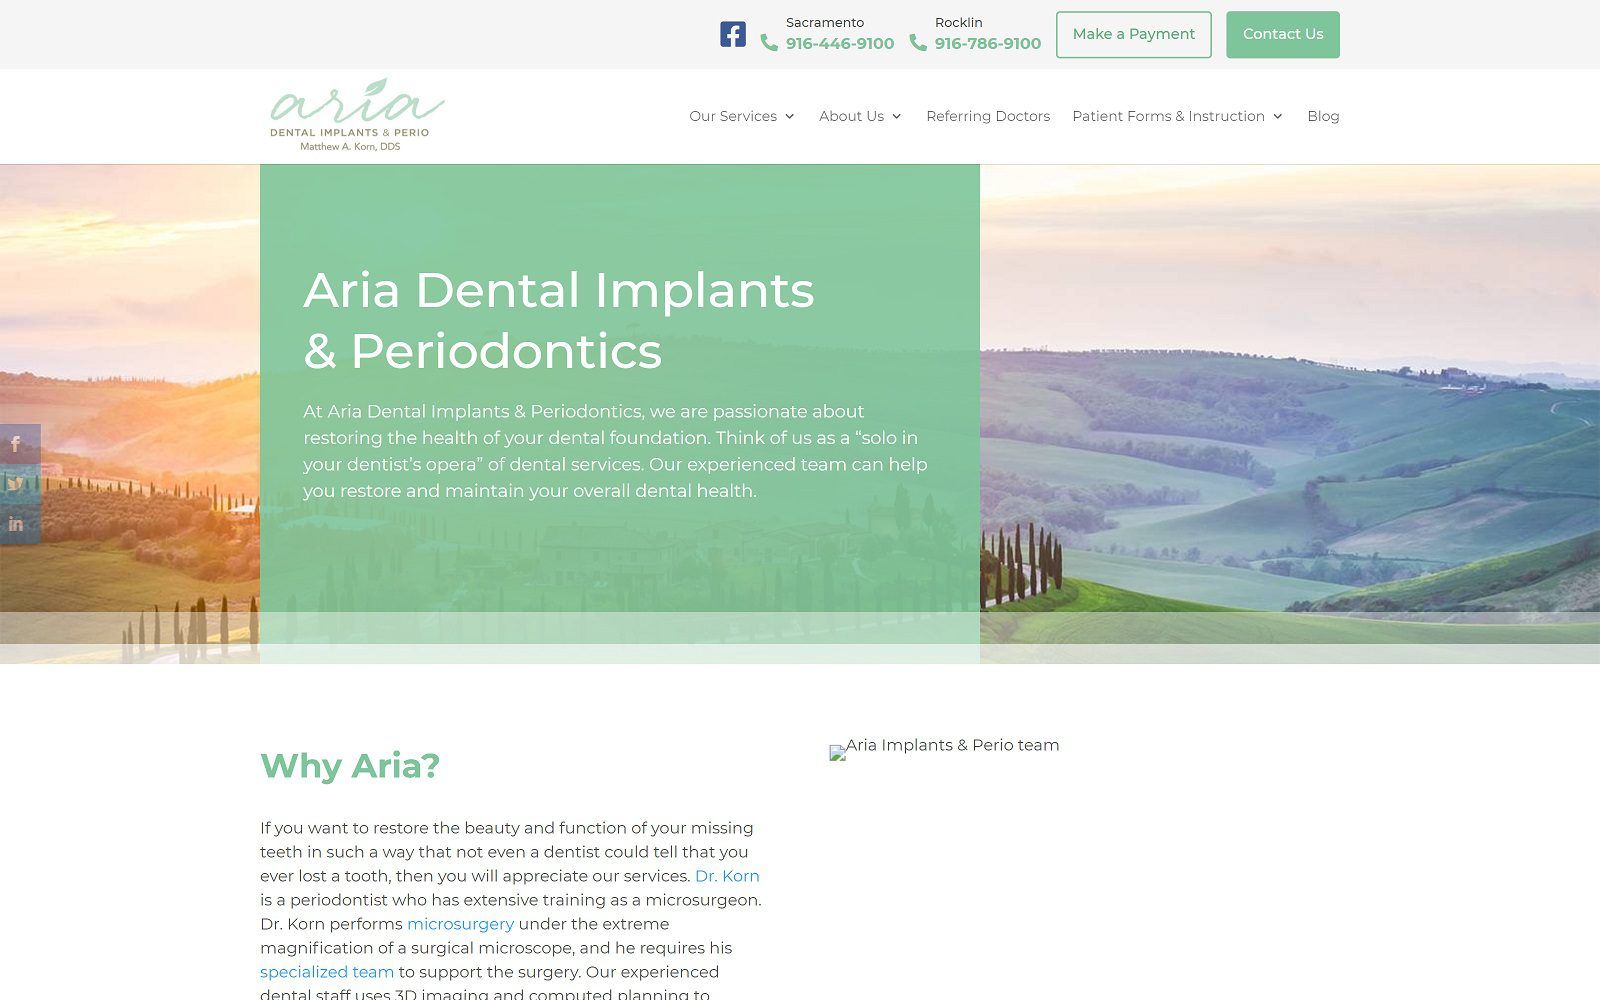 The screenshot of aria dental implants & periodontics website